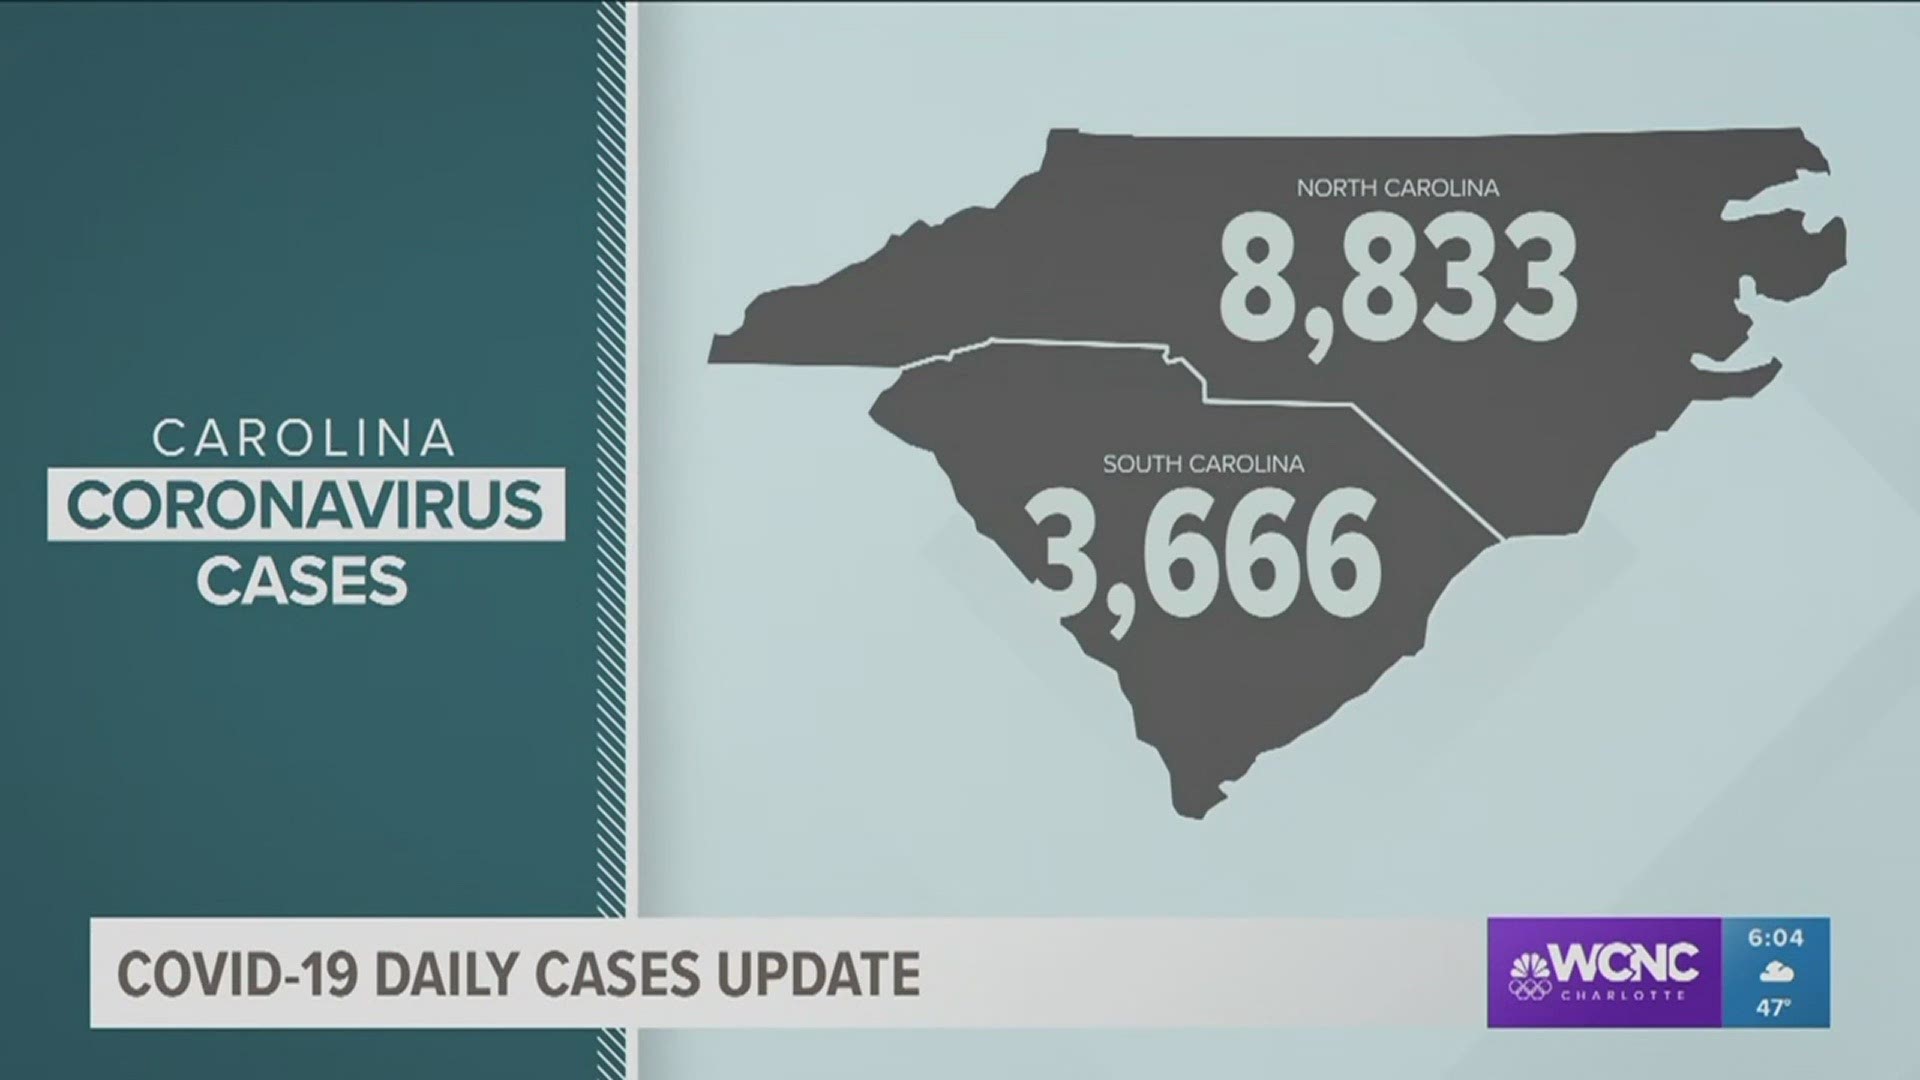 North Carolina has 8,833 cases while South Carolina has 3,666.